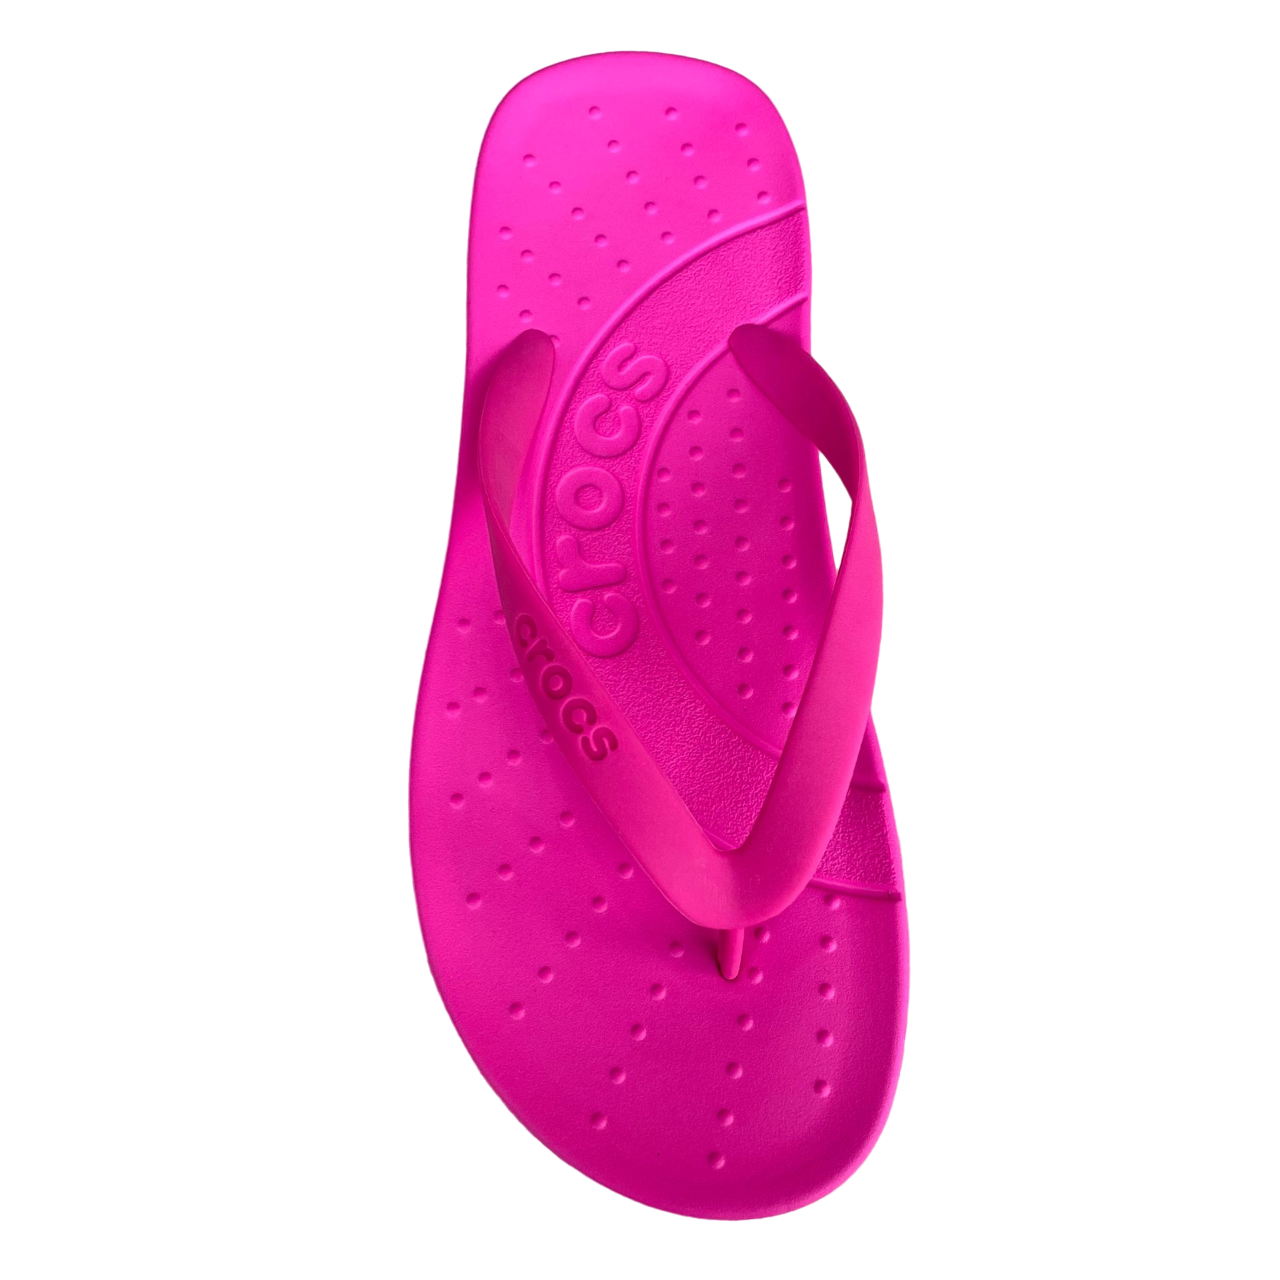 Crocs Flip flops for adults Flip 210089-6TW pink